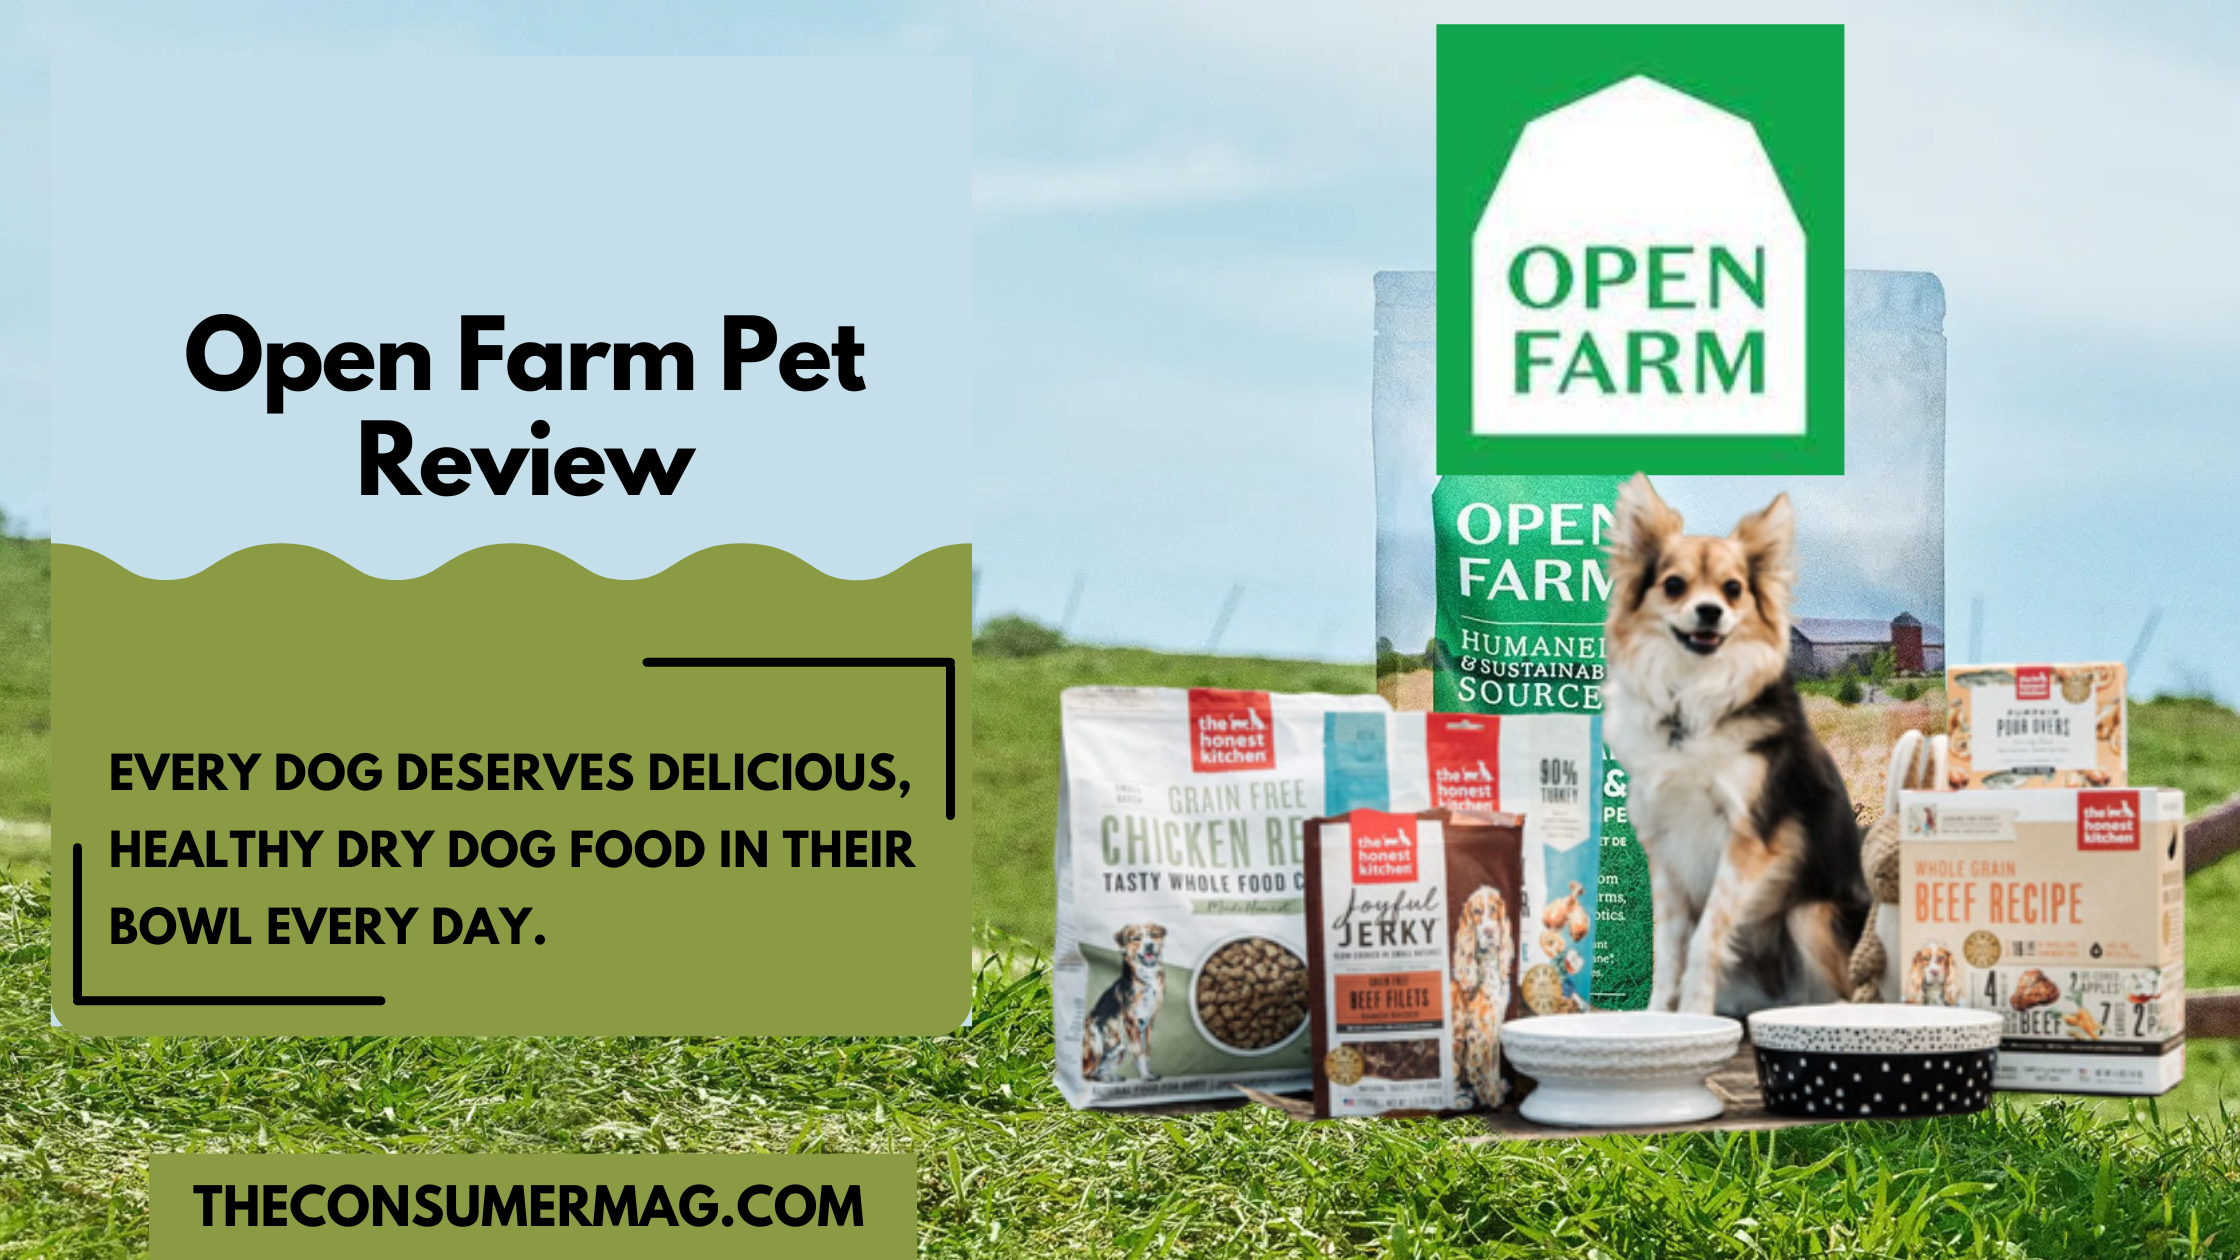 Open Farm Pet featured image